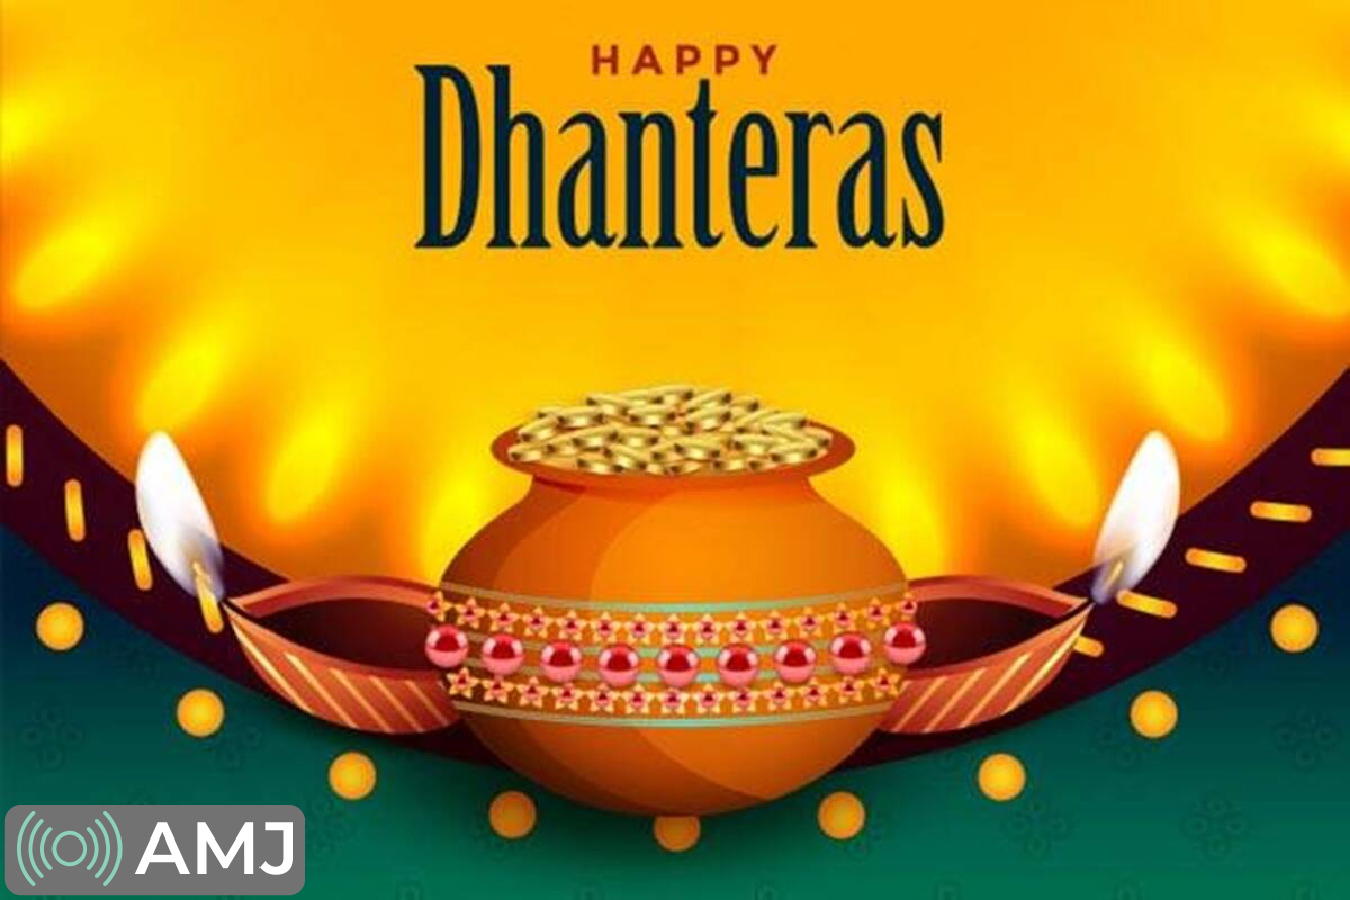 Happy Dhanteras 2021 Images